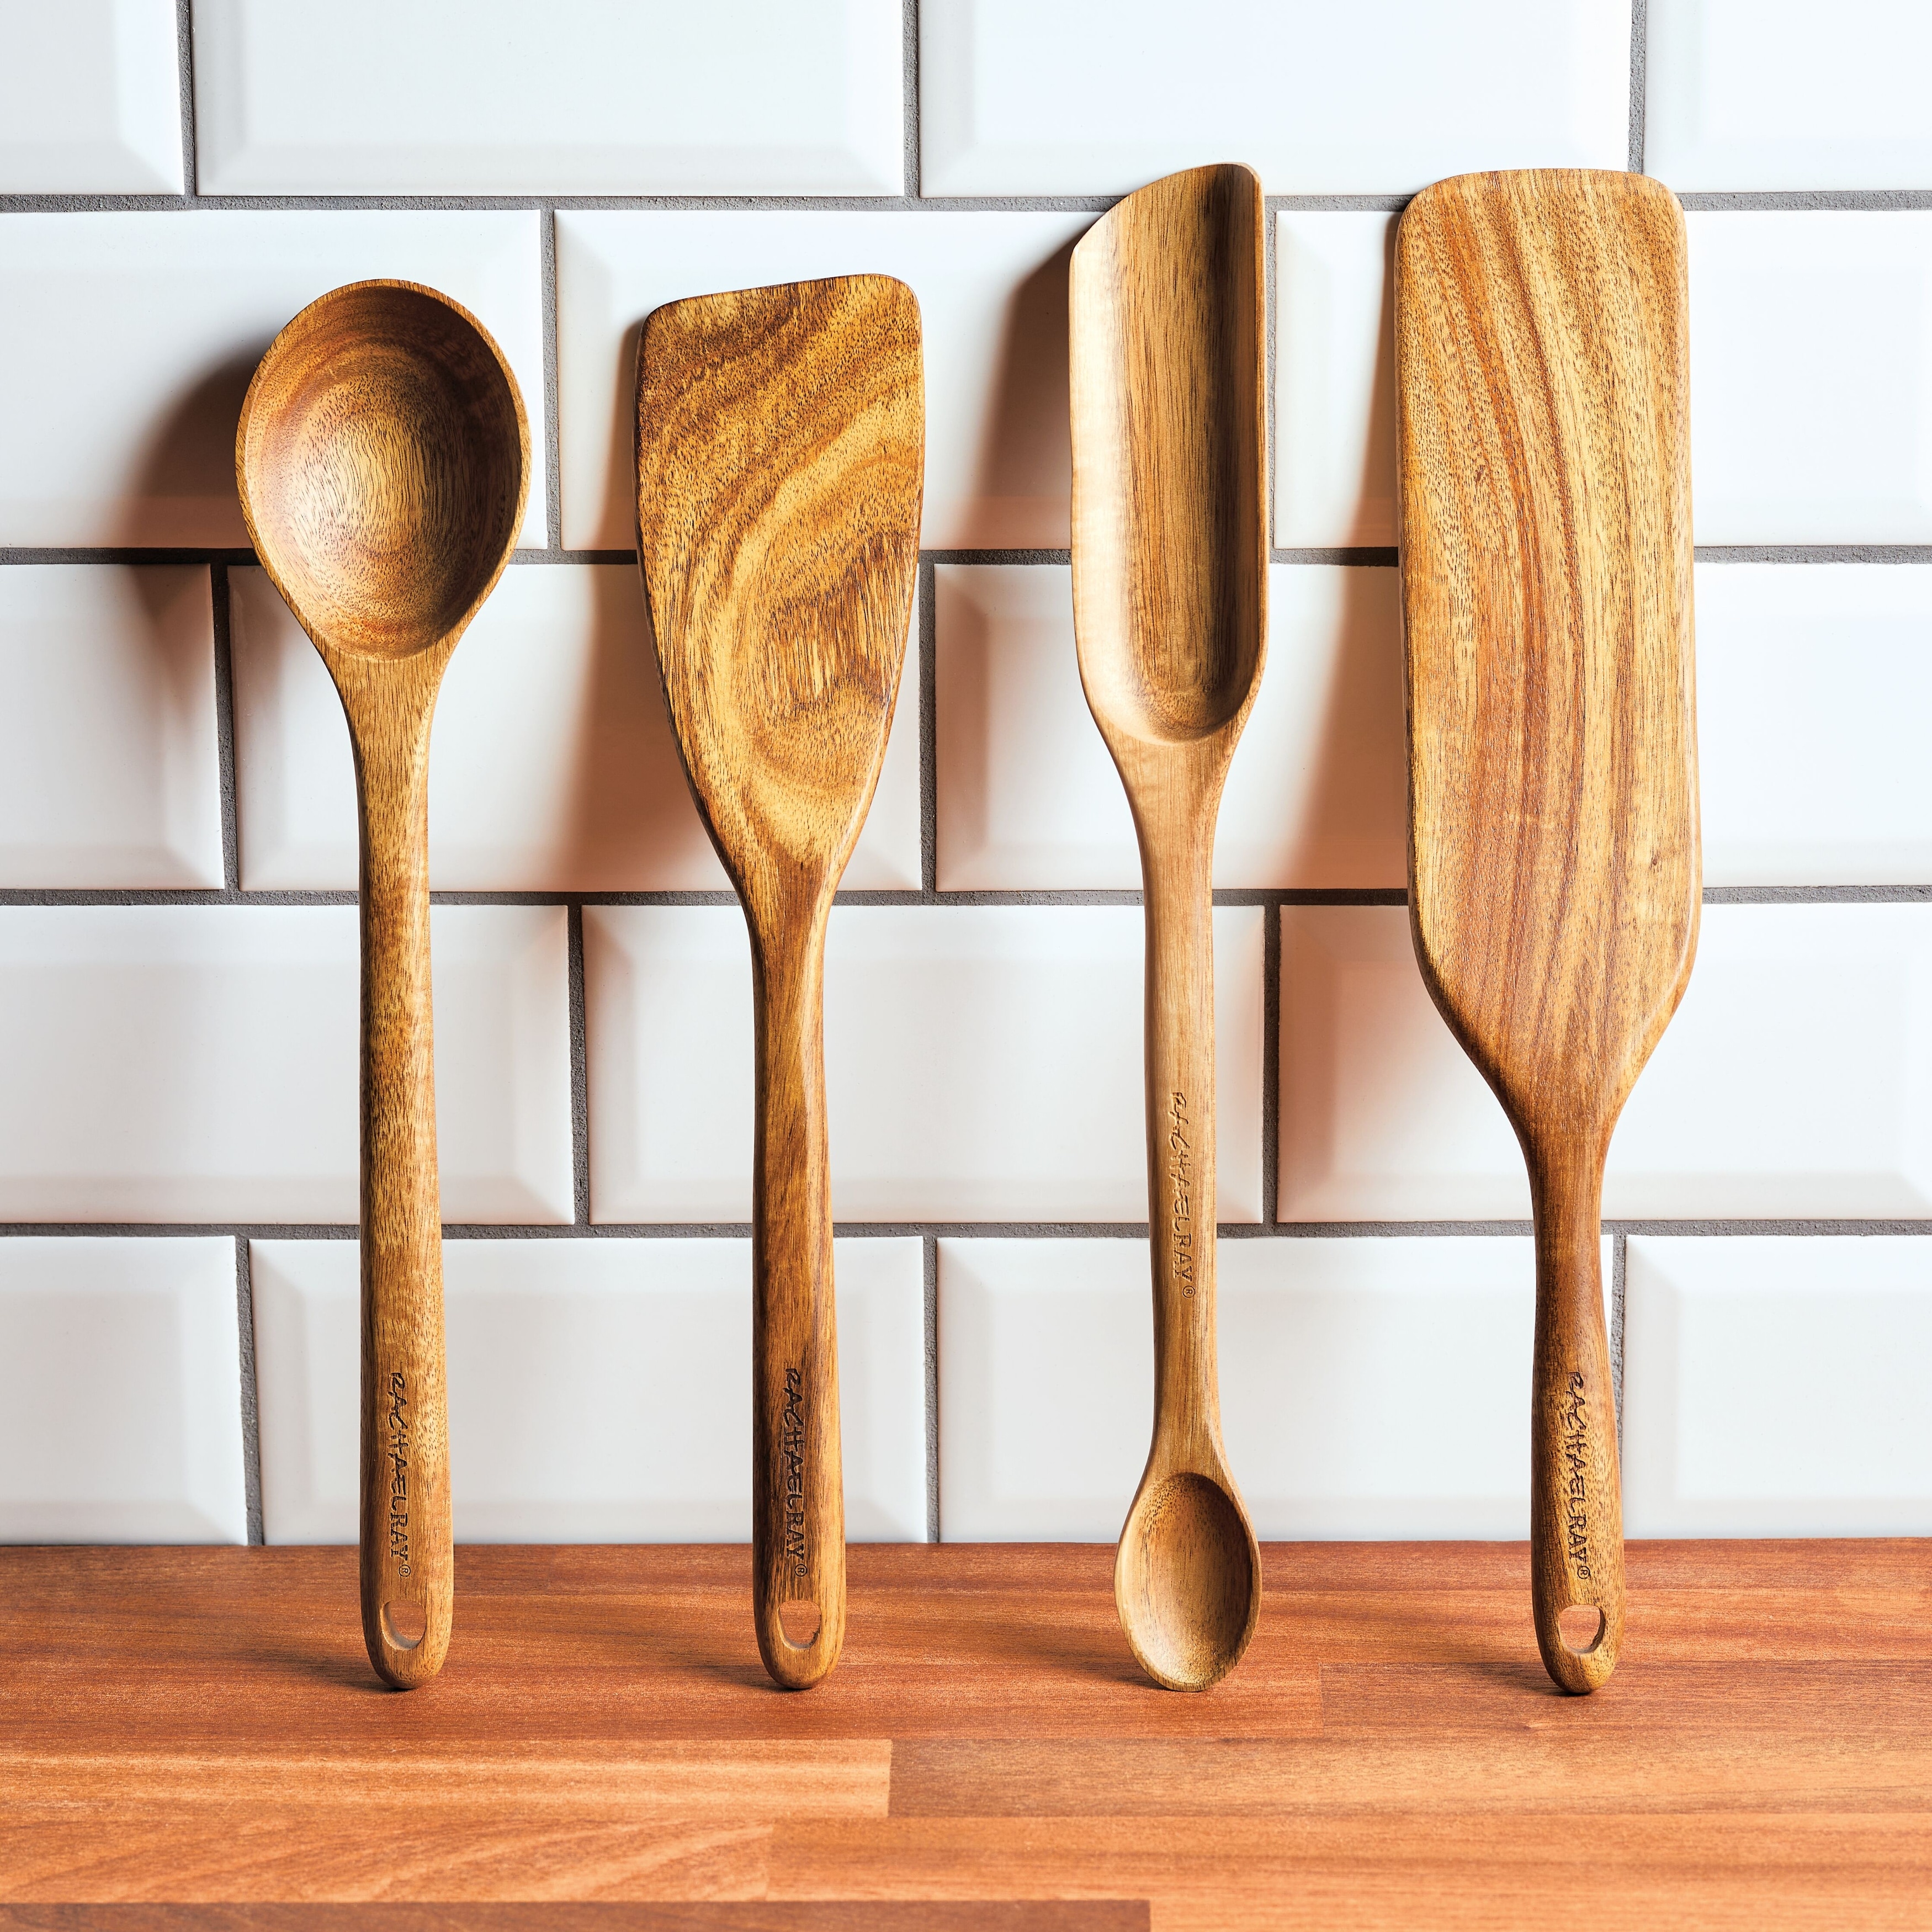 Rachael Ray Tools & Gadgets Wooden Kitchen Utensil Set (3-Piece